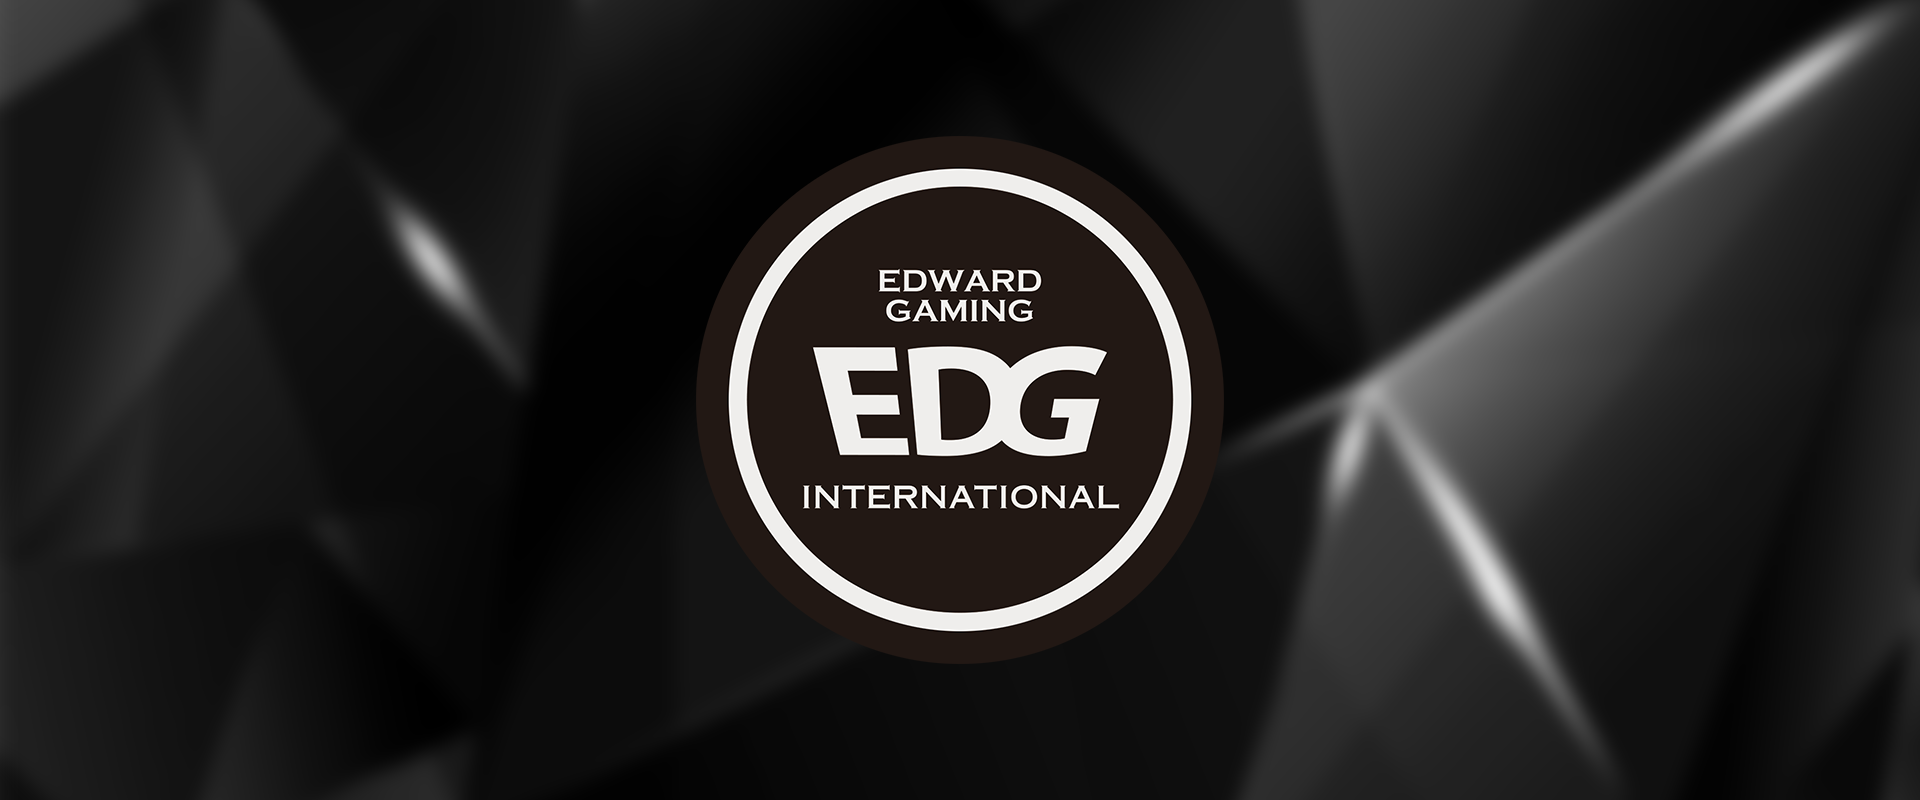 Edward Gaming отобралась на Worlds 2021 по League of Legends